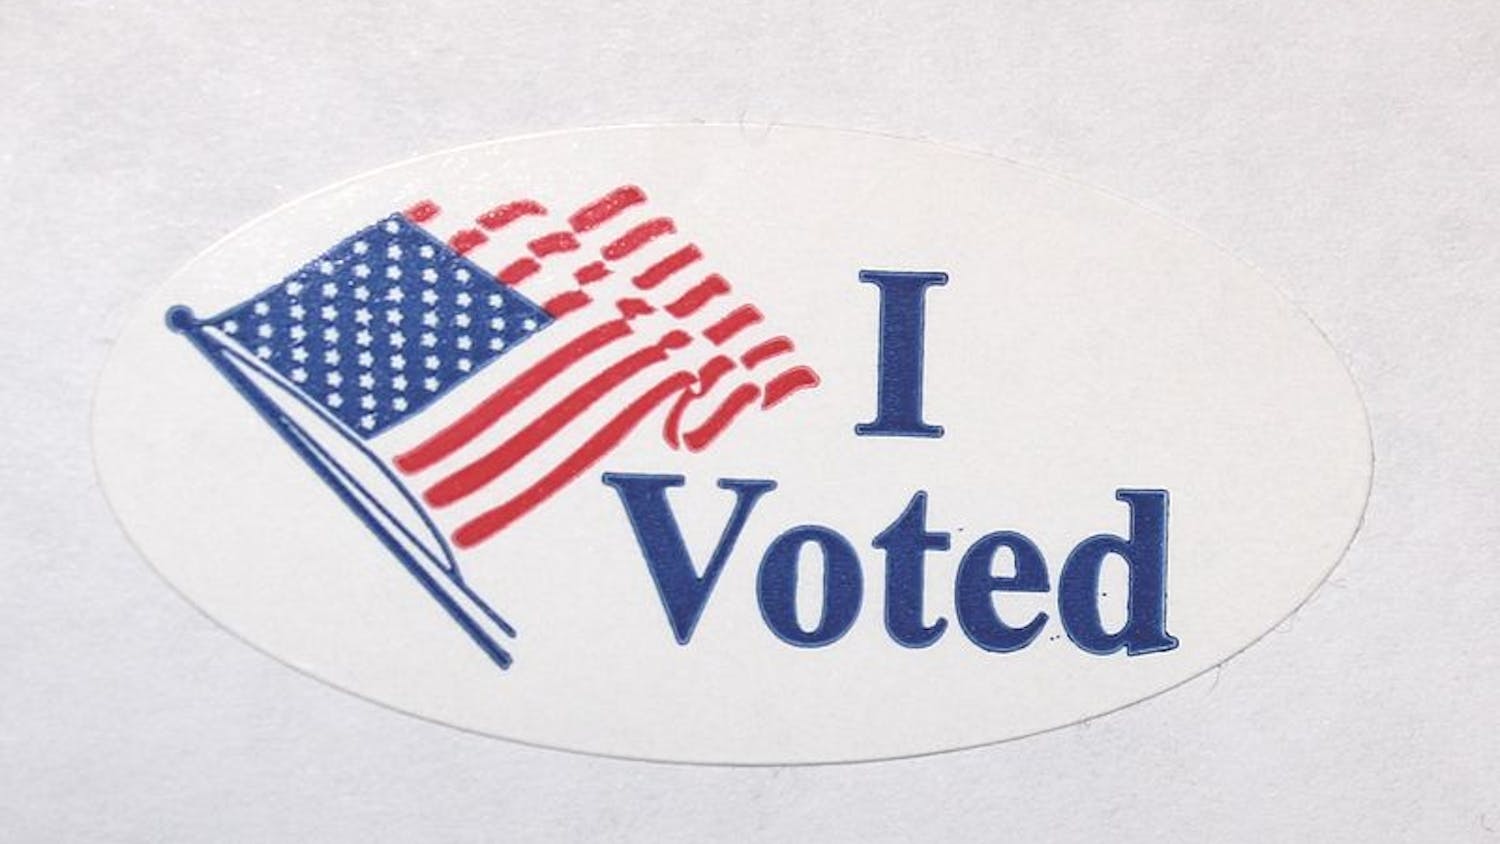 I_Voted_Sticker_Dwight Burdette.jpg